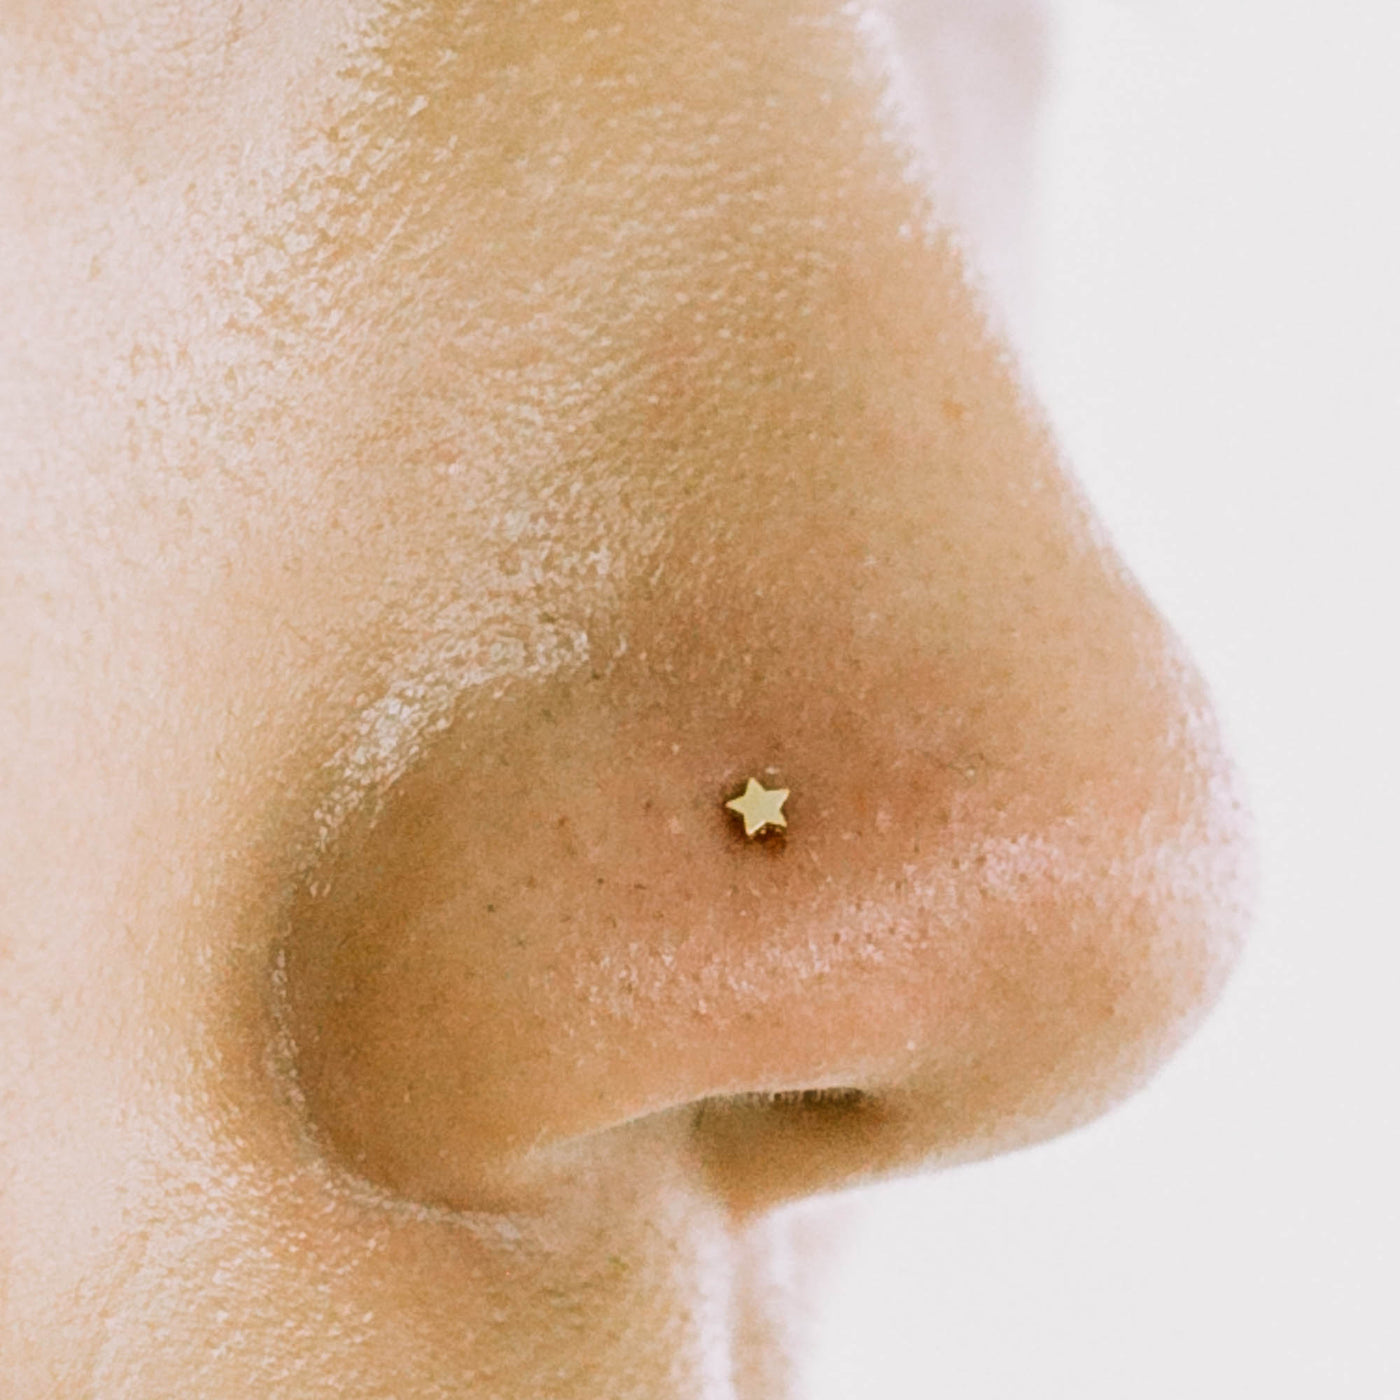 Nose Studs Piercing